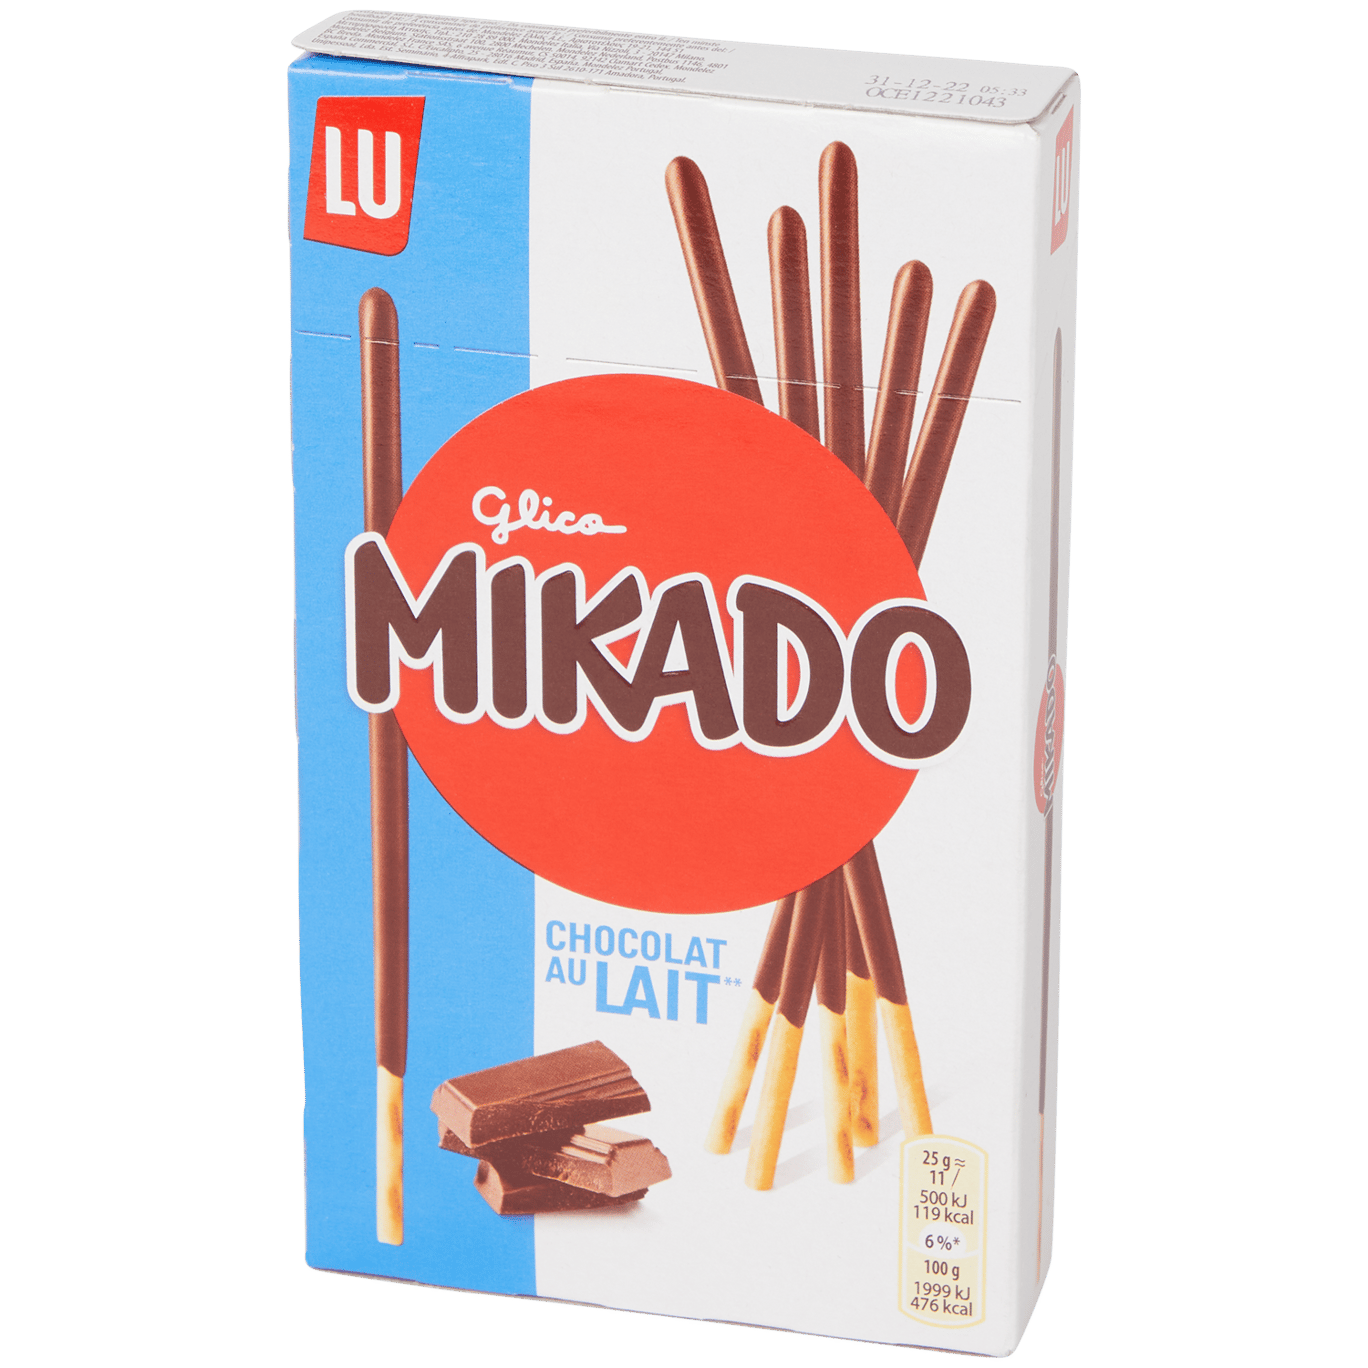 Slordig Verschuiving Fluisteren LU Mikado Sticks | Action.com